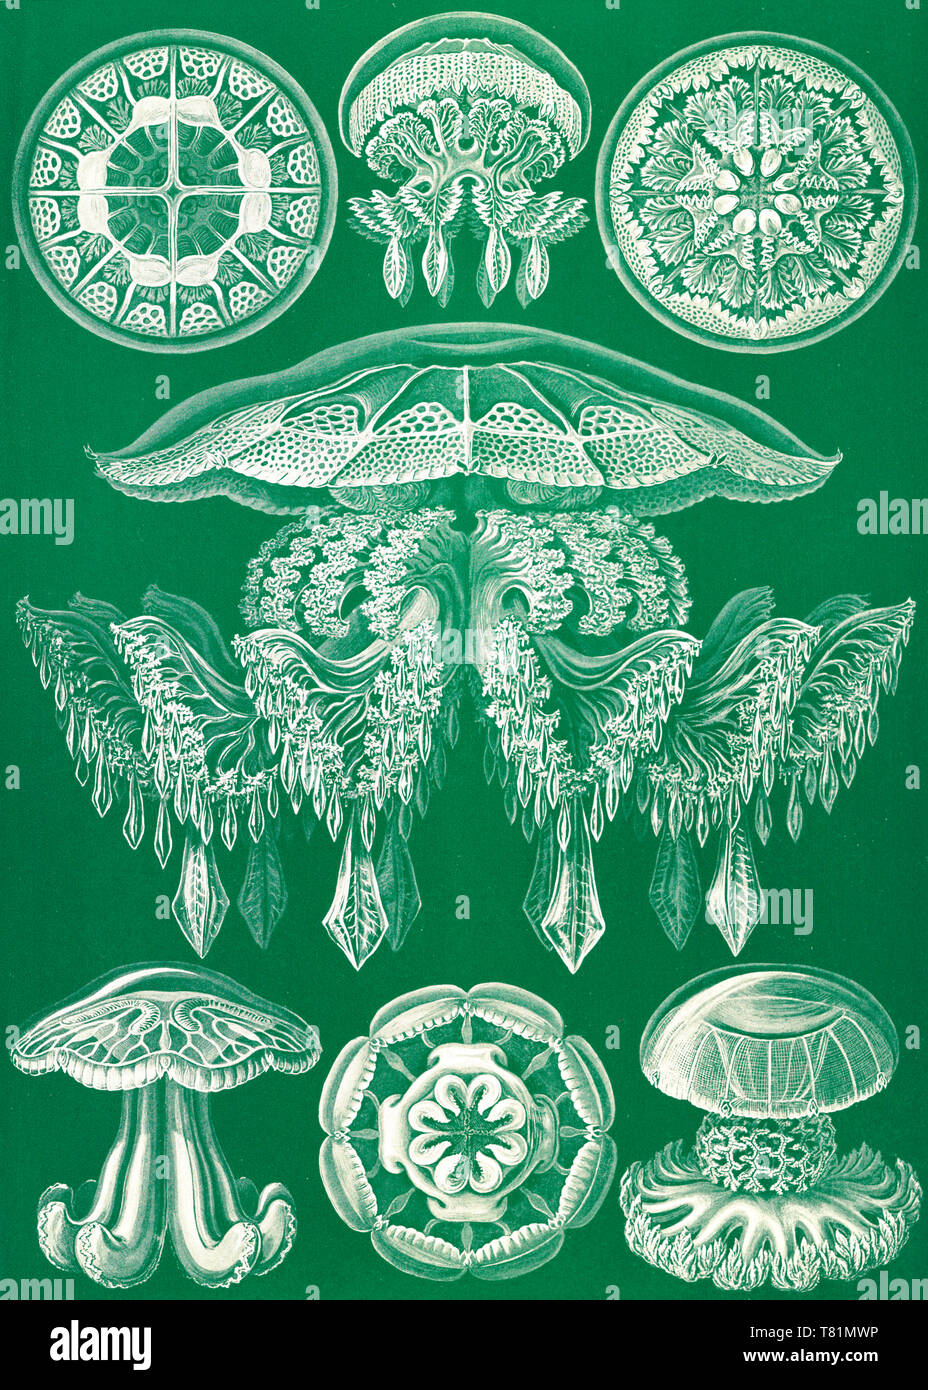 Ernst Haeckel, Discomedusae, Jellyfish Stock Photo